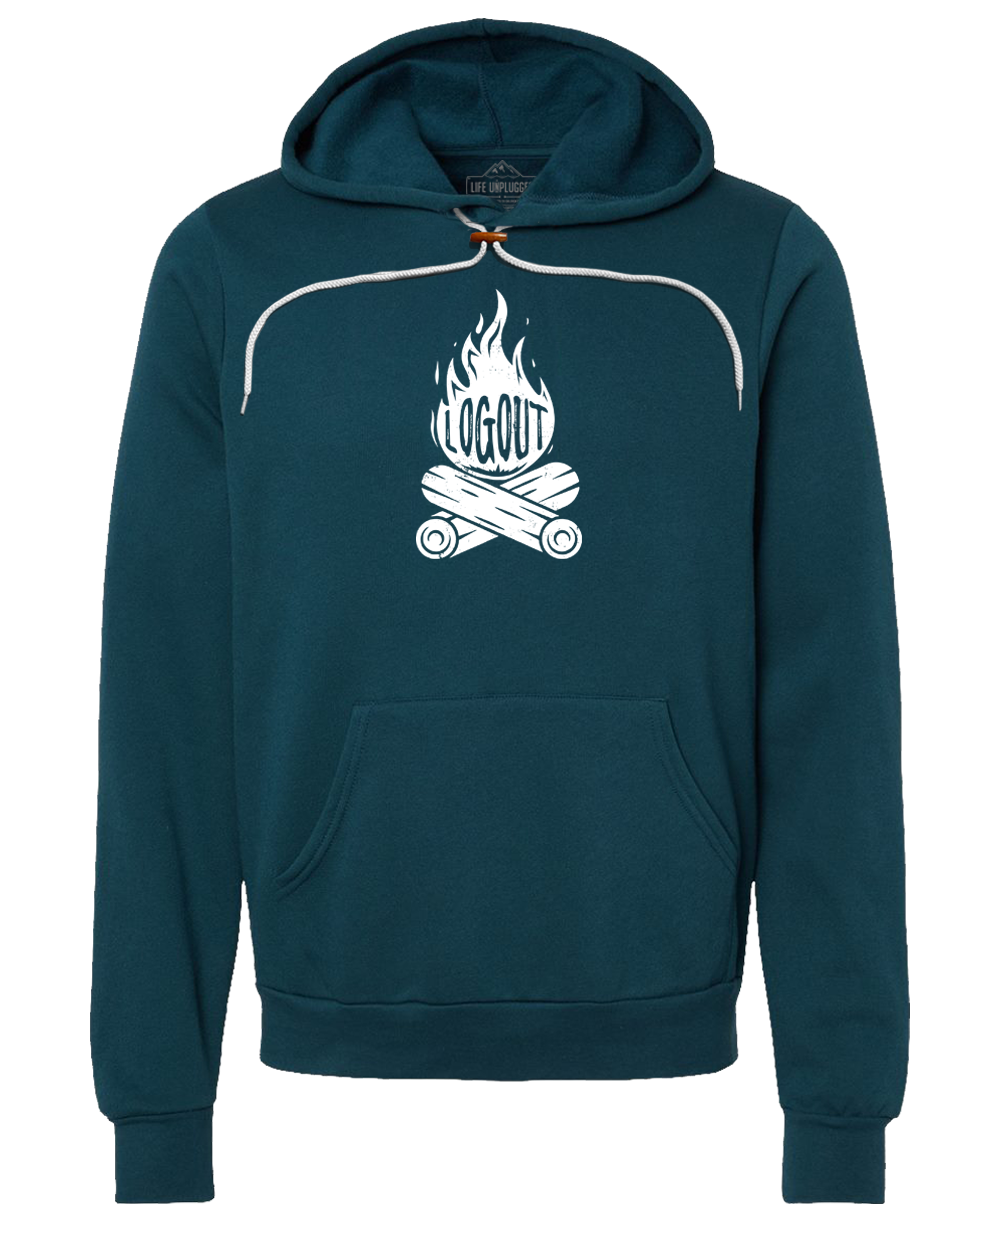 Log Out Campfire Premium Super Soft Hooded Sweatshirt - Life Unplugged